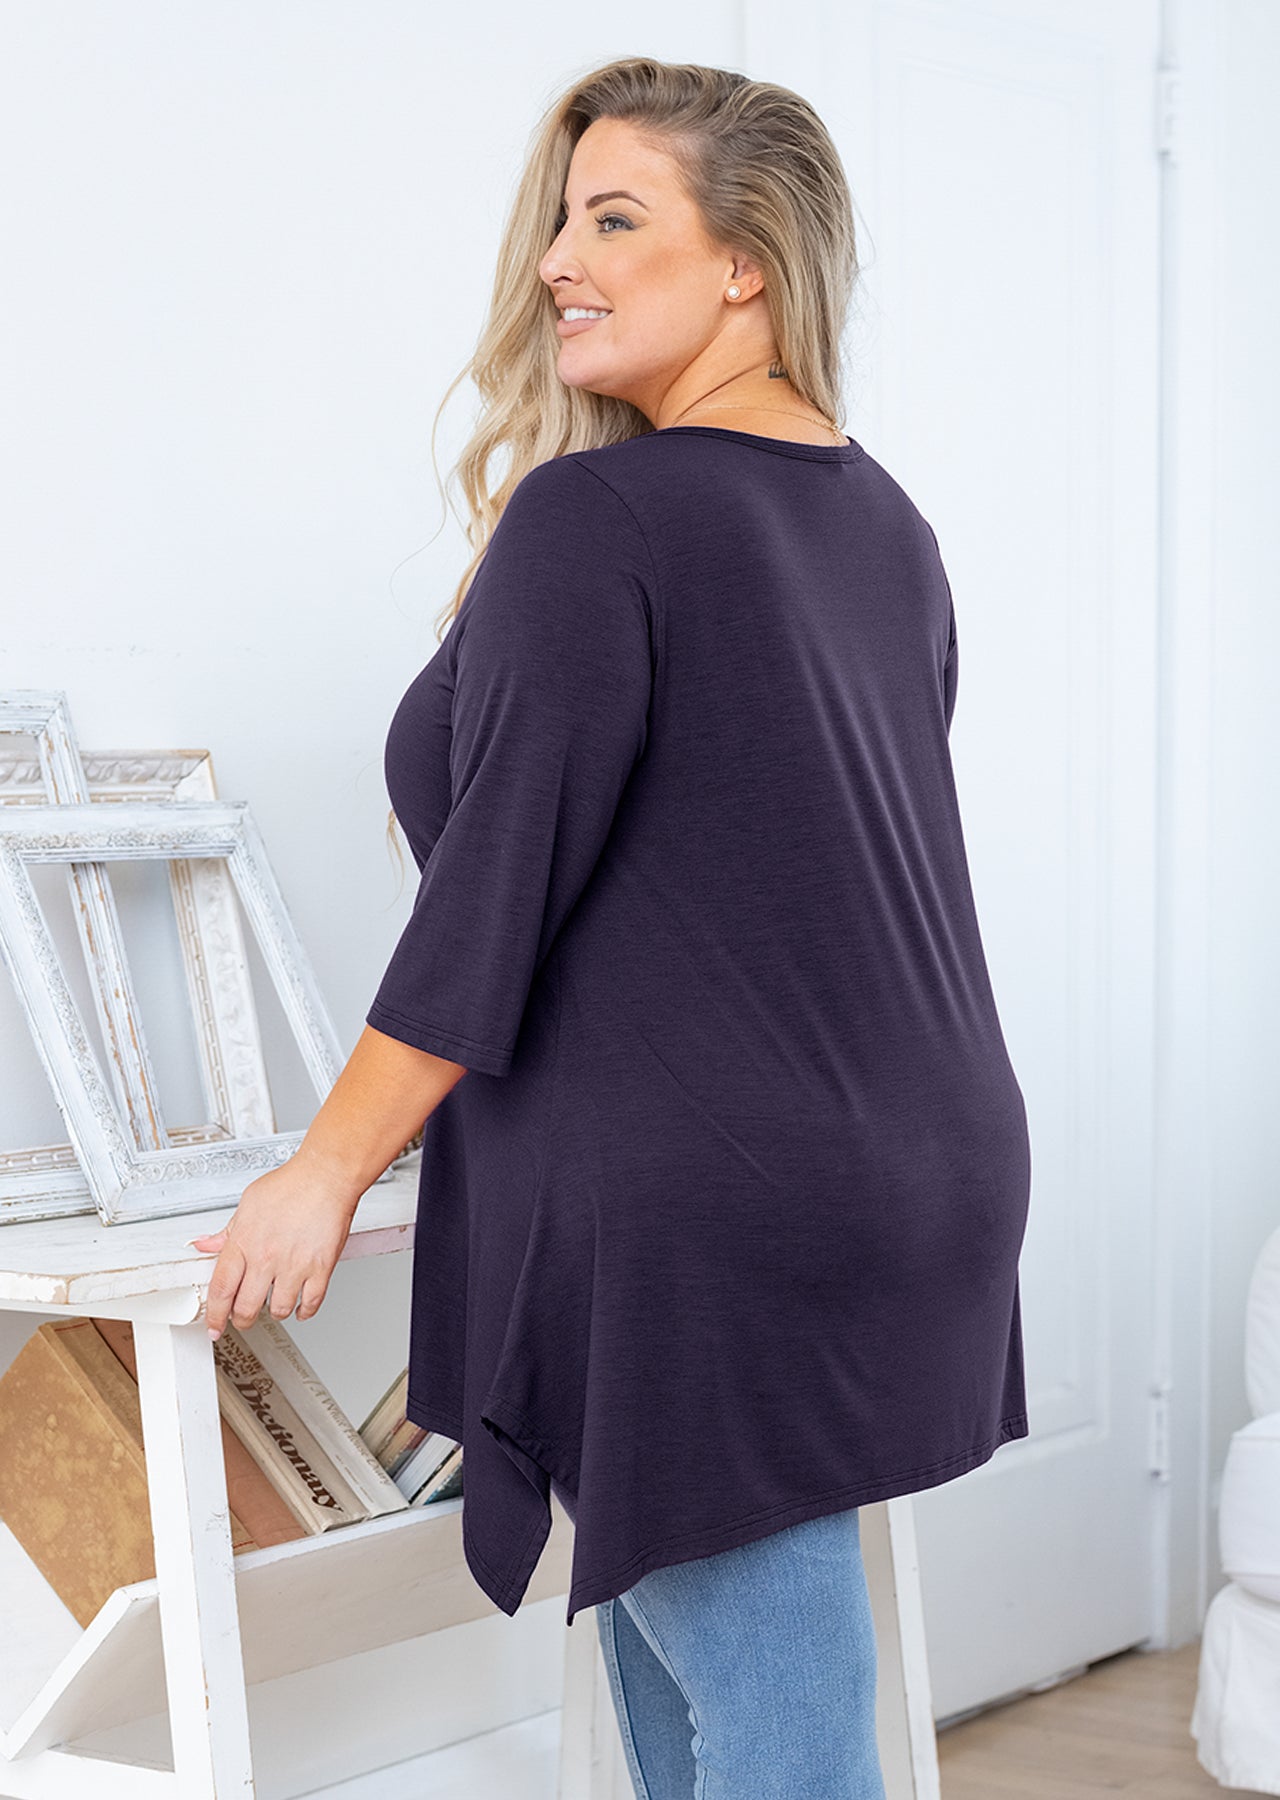  Plus Size Tops For Women 3X Long Sleeve Tunics